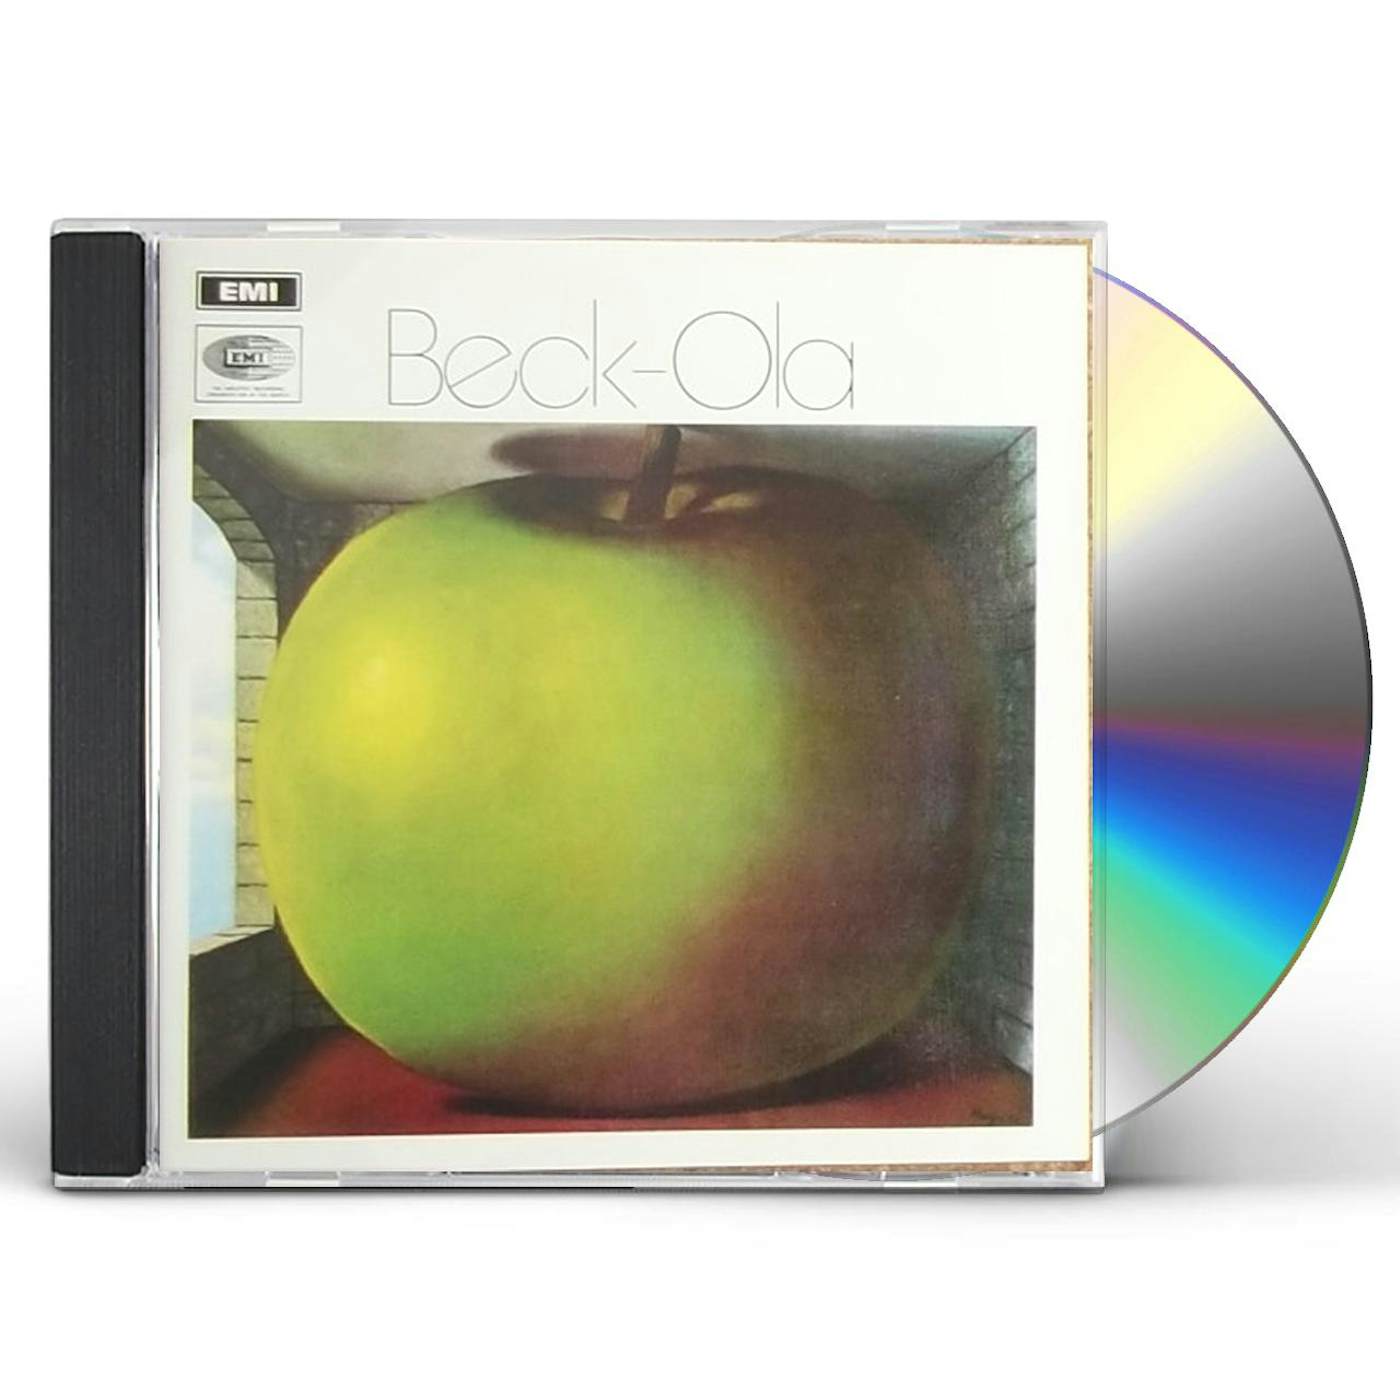 Jeff Beck BECK-OLA CD